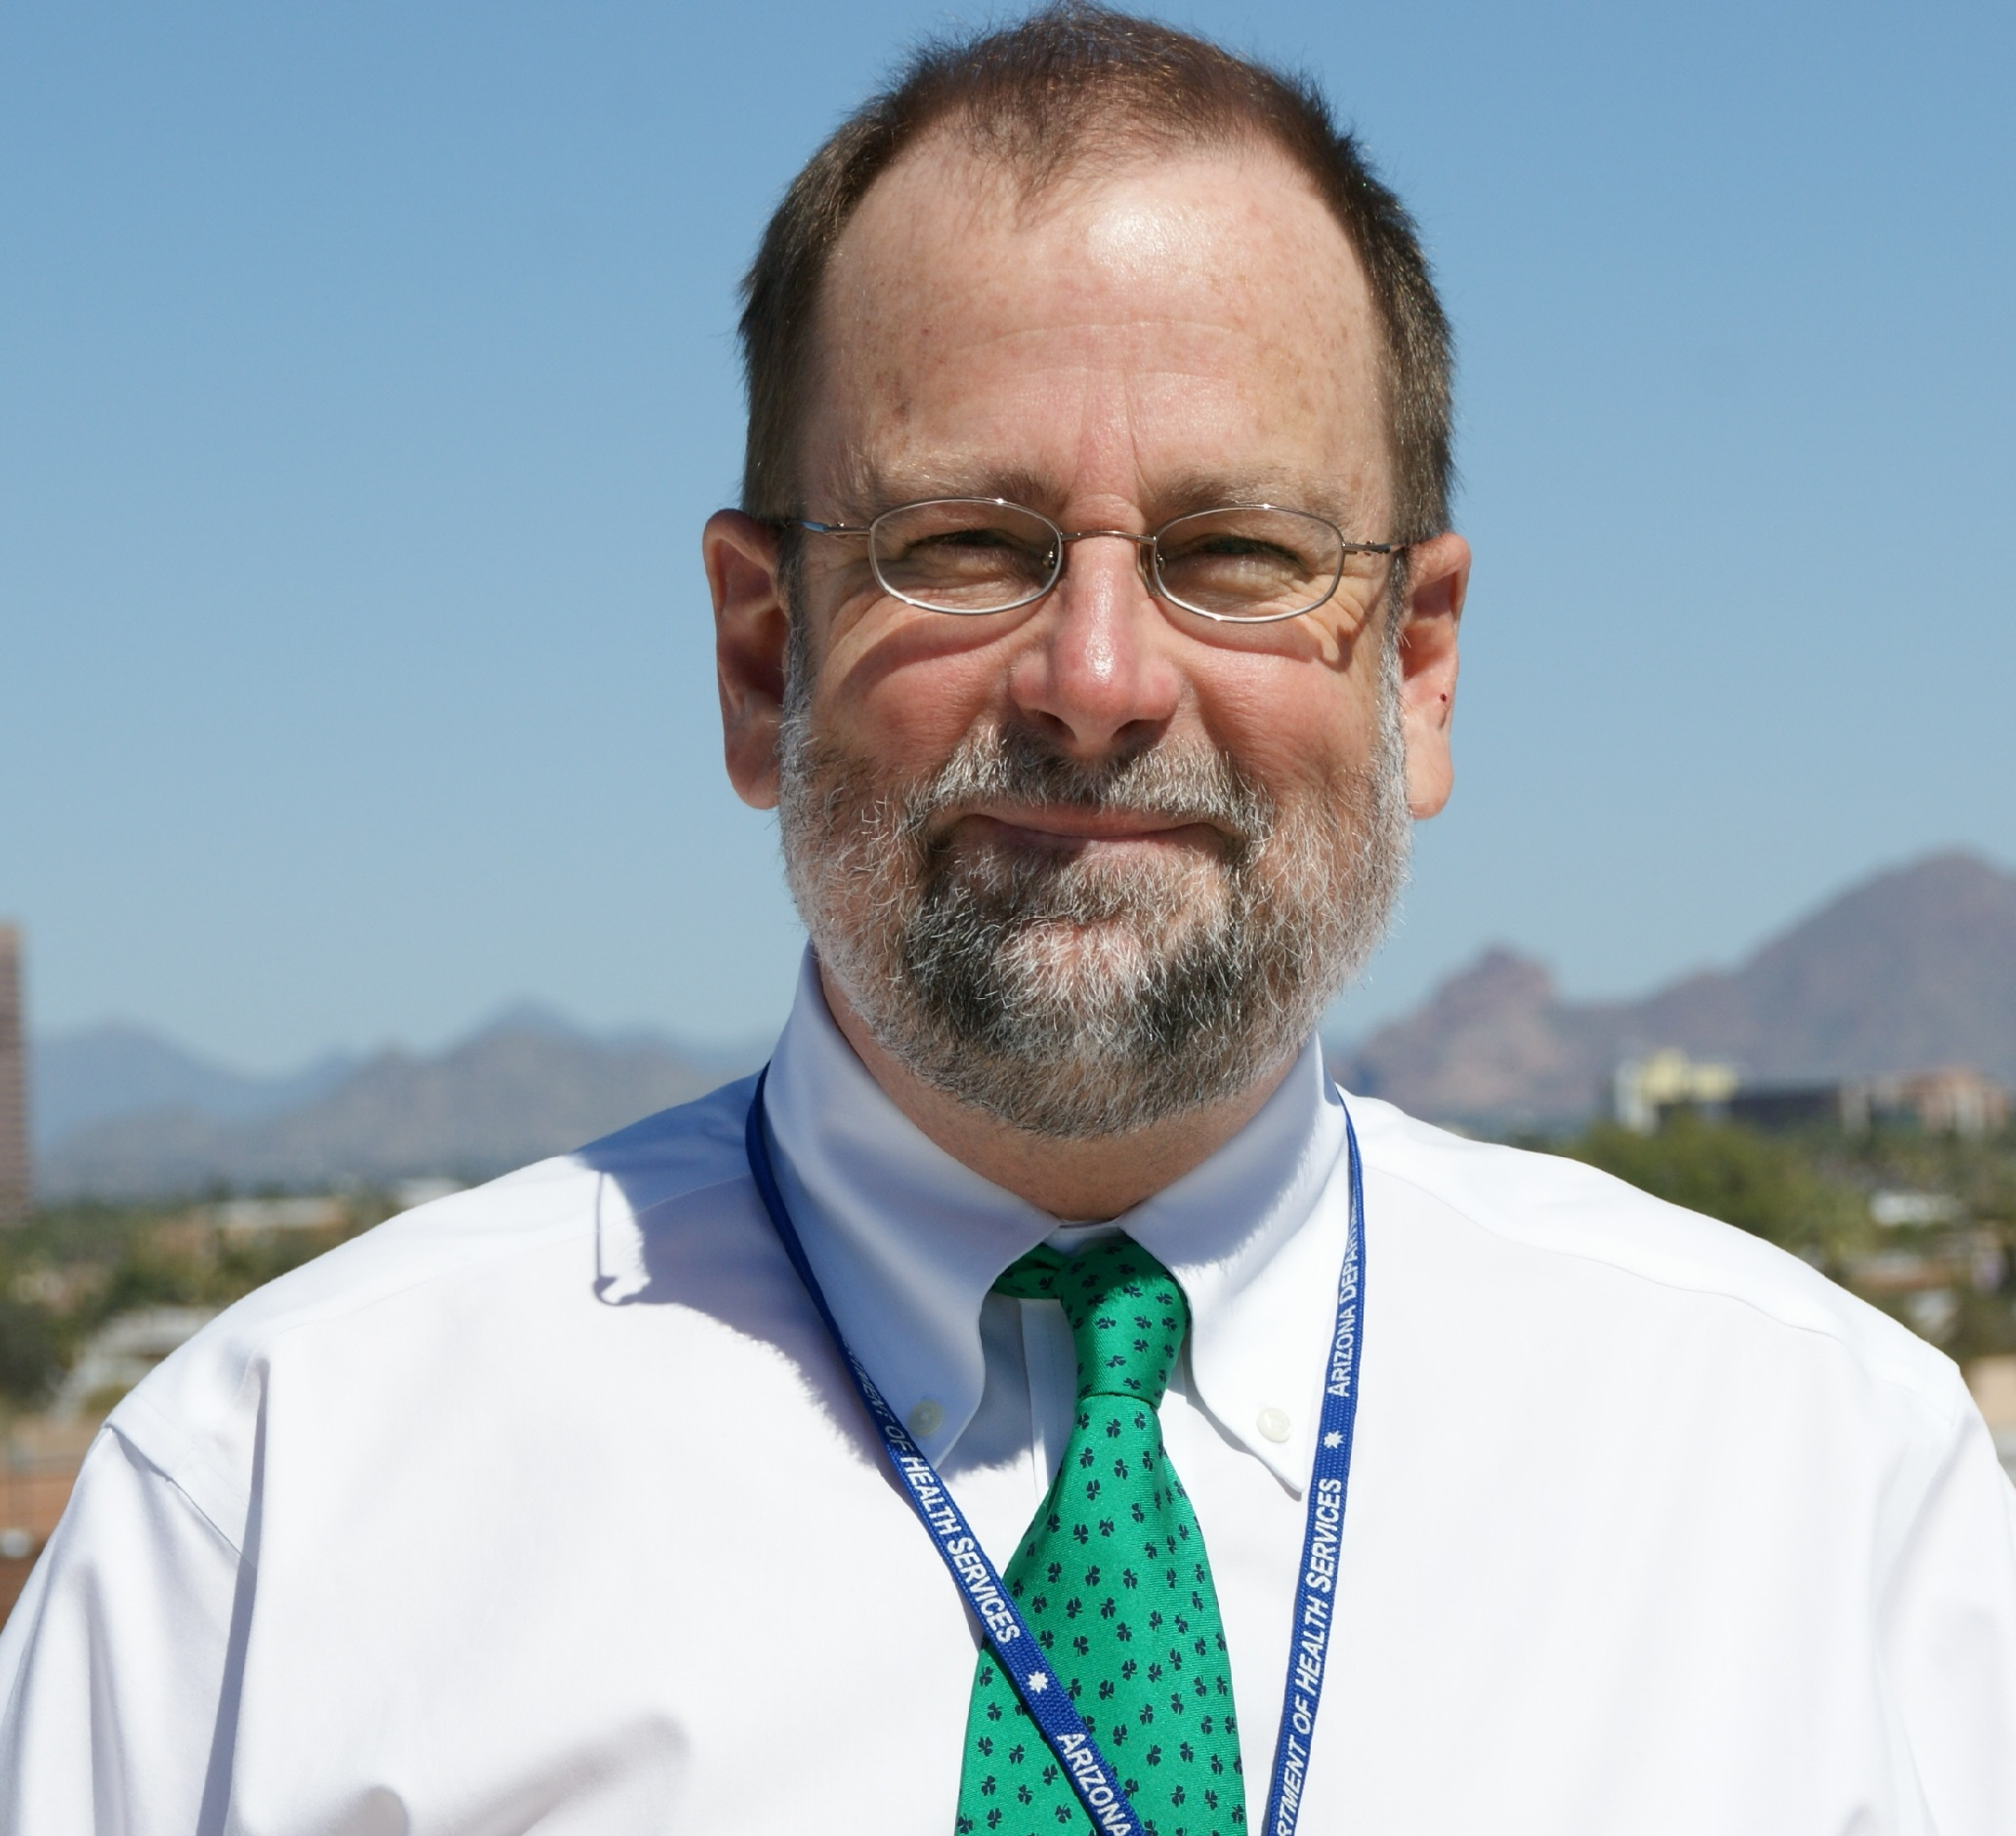 Will Humble, Executive director for the Arizona Public Health Association